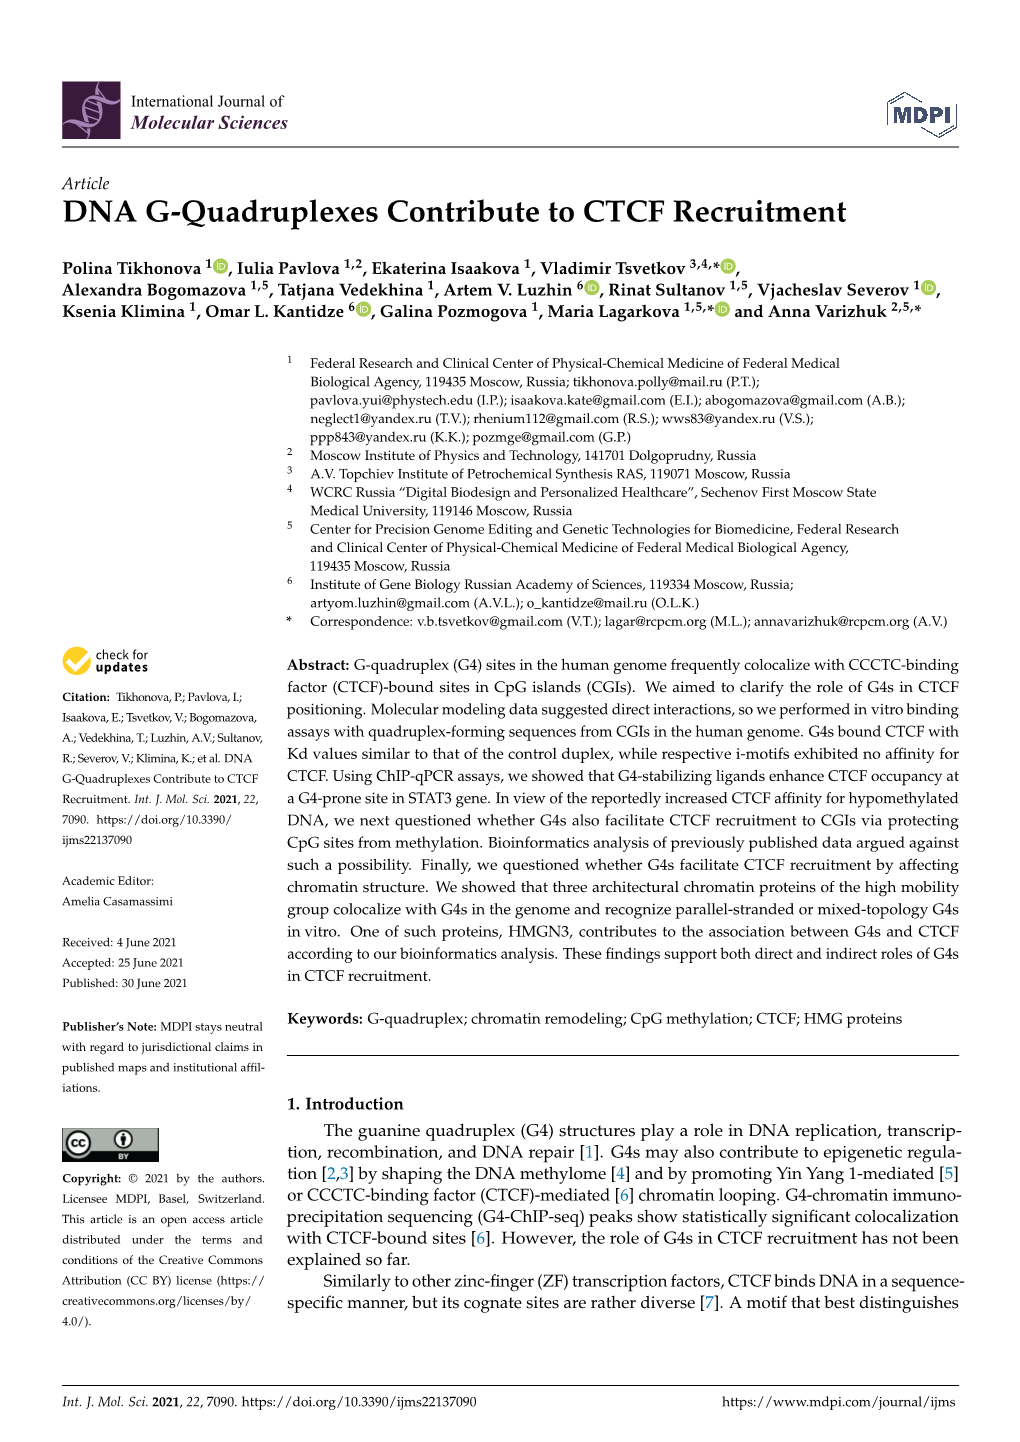 DNA G-Quadruplexes Contribute to CTCF Recruitment